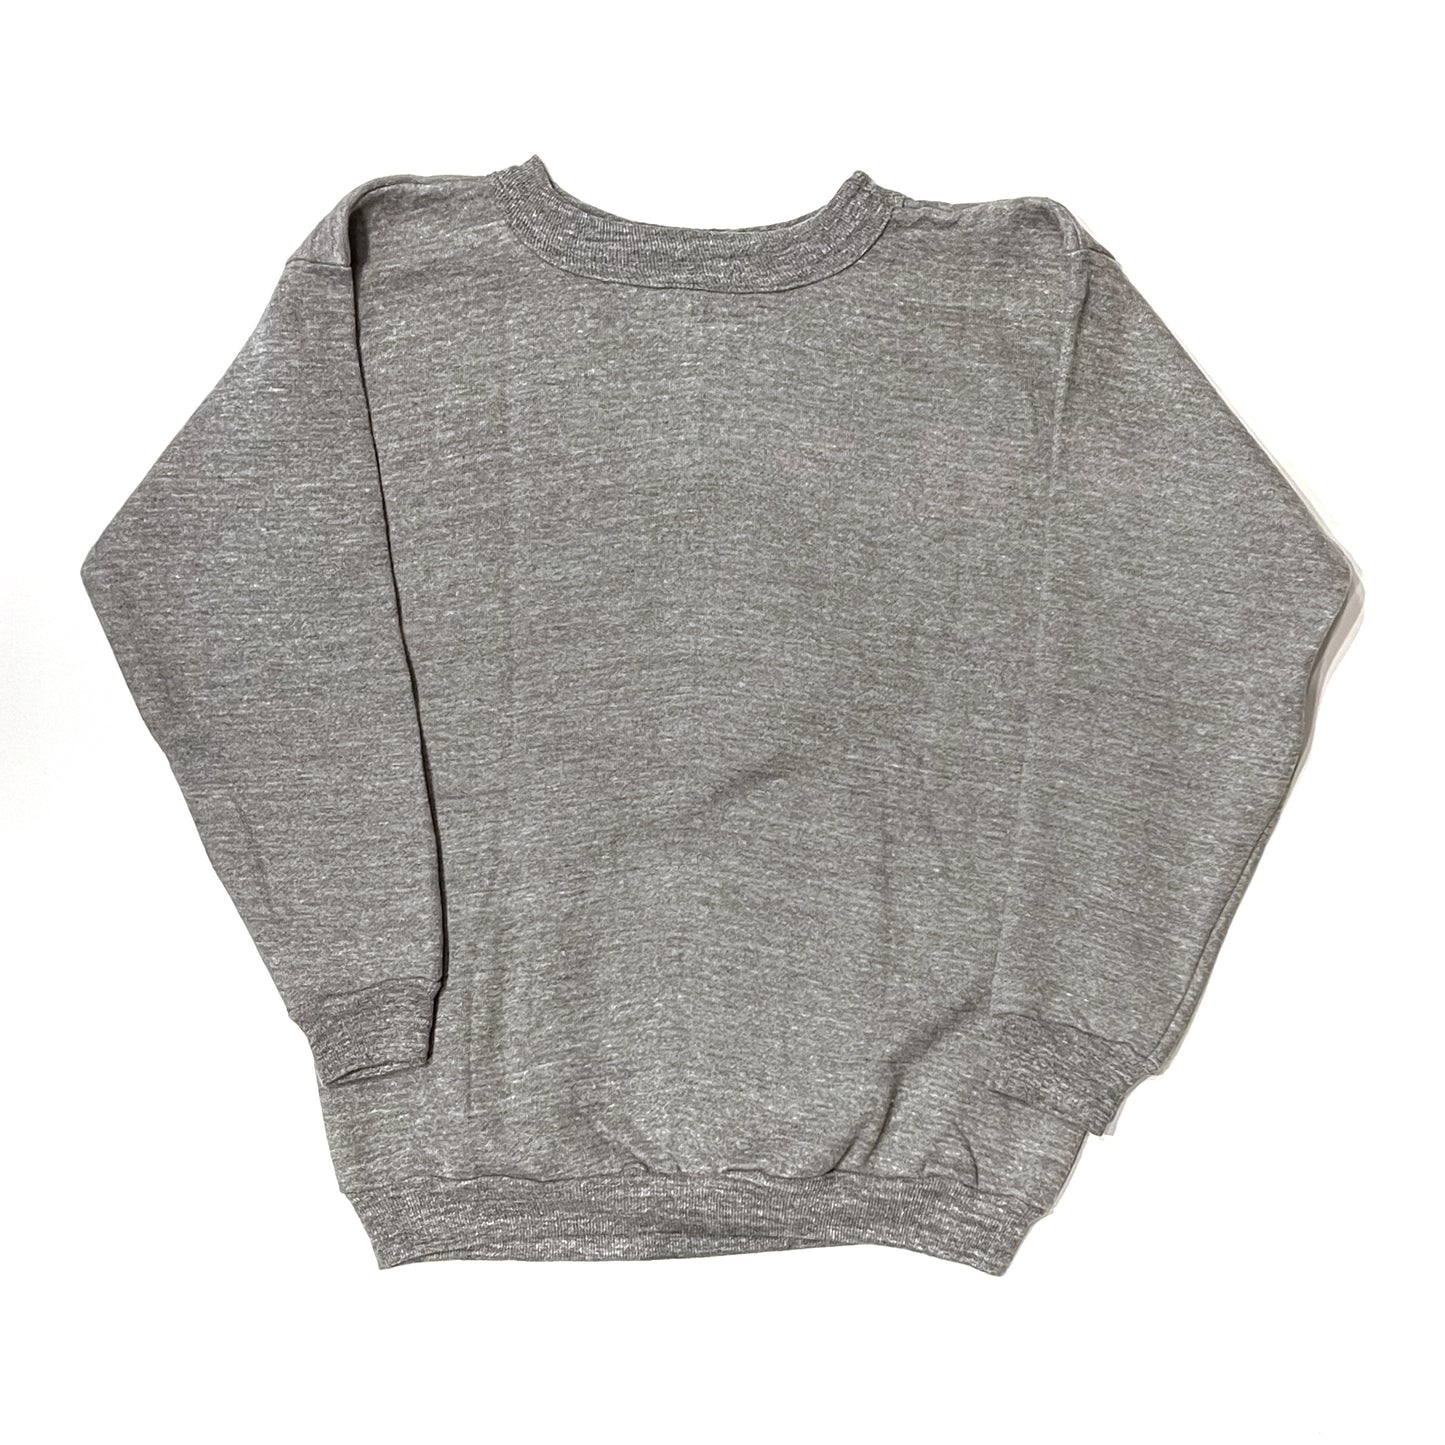 (New Old Stock) 1950s - 1960s Sweatshirt